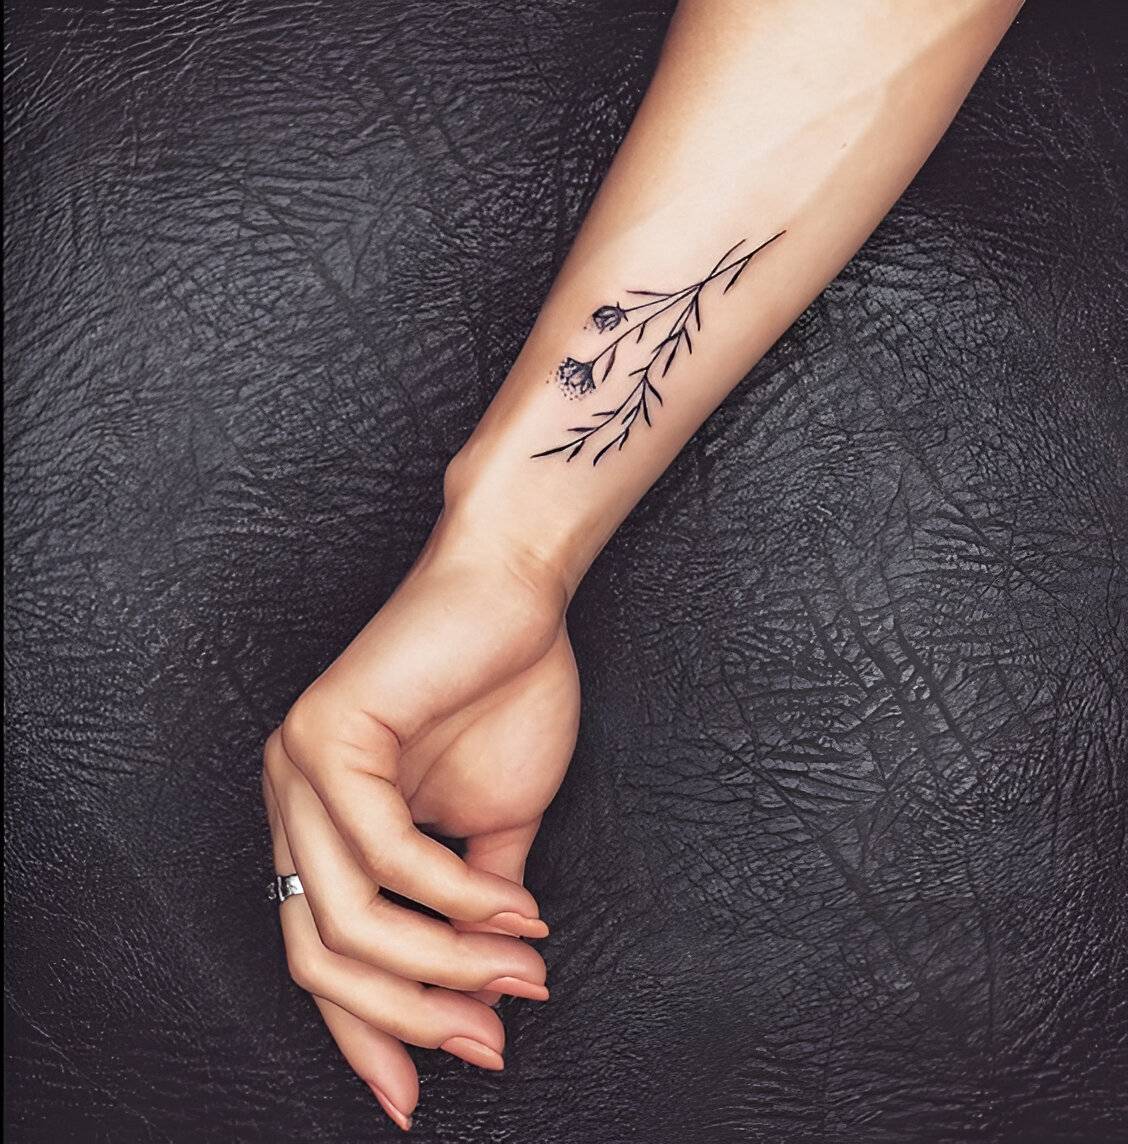 27 Stunning Forearm Tattoos To Vamp Up Your Femininity 16